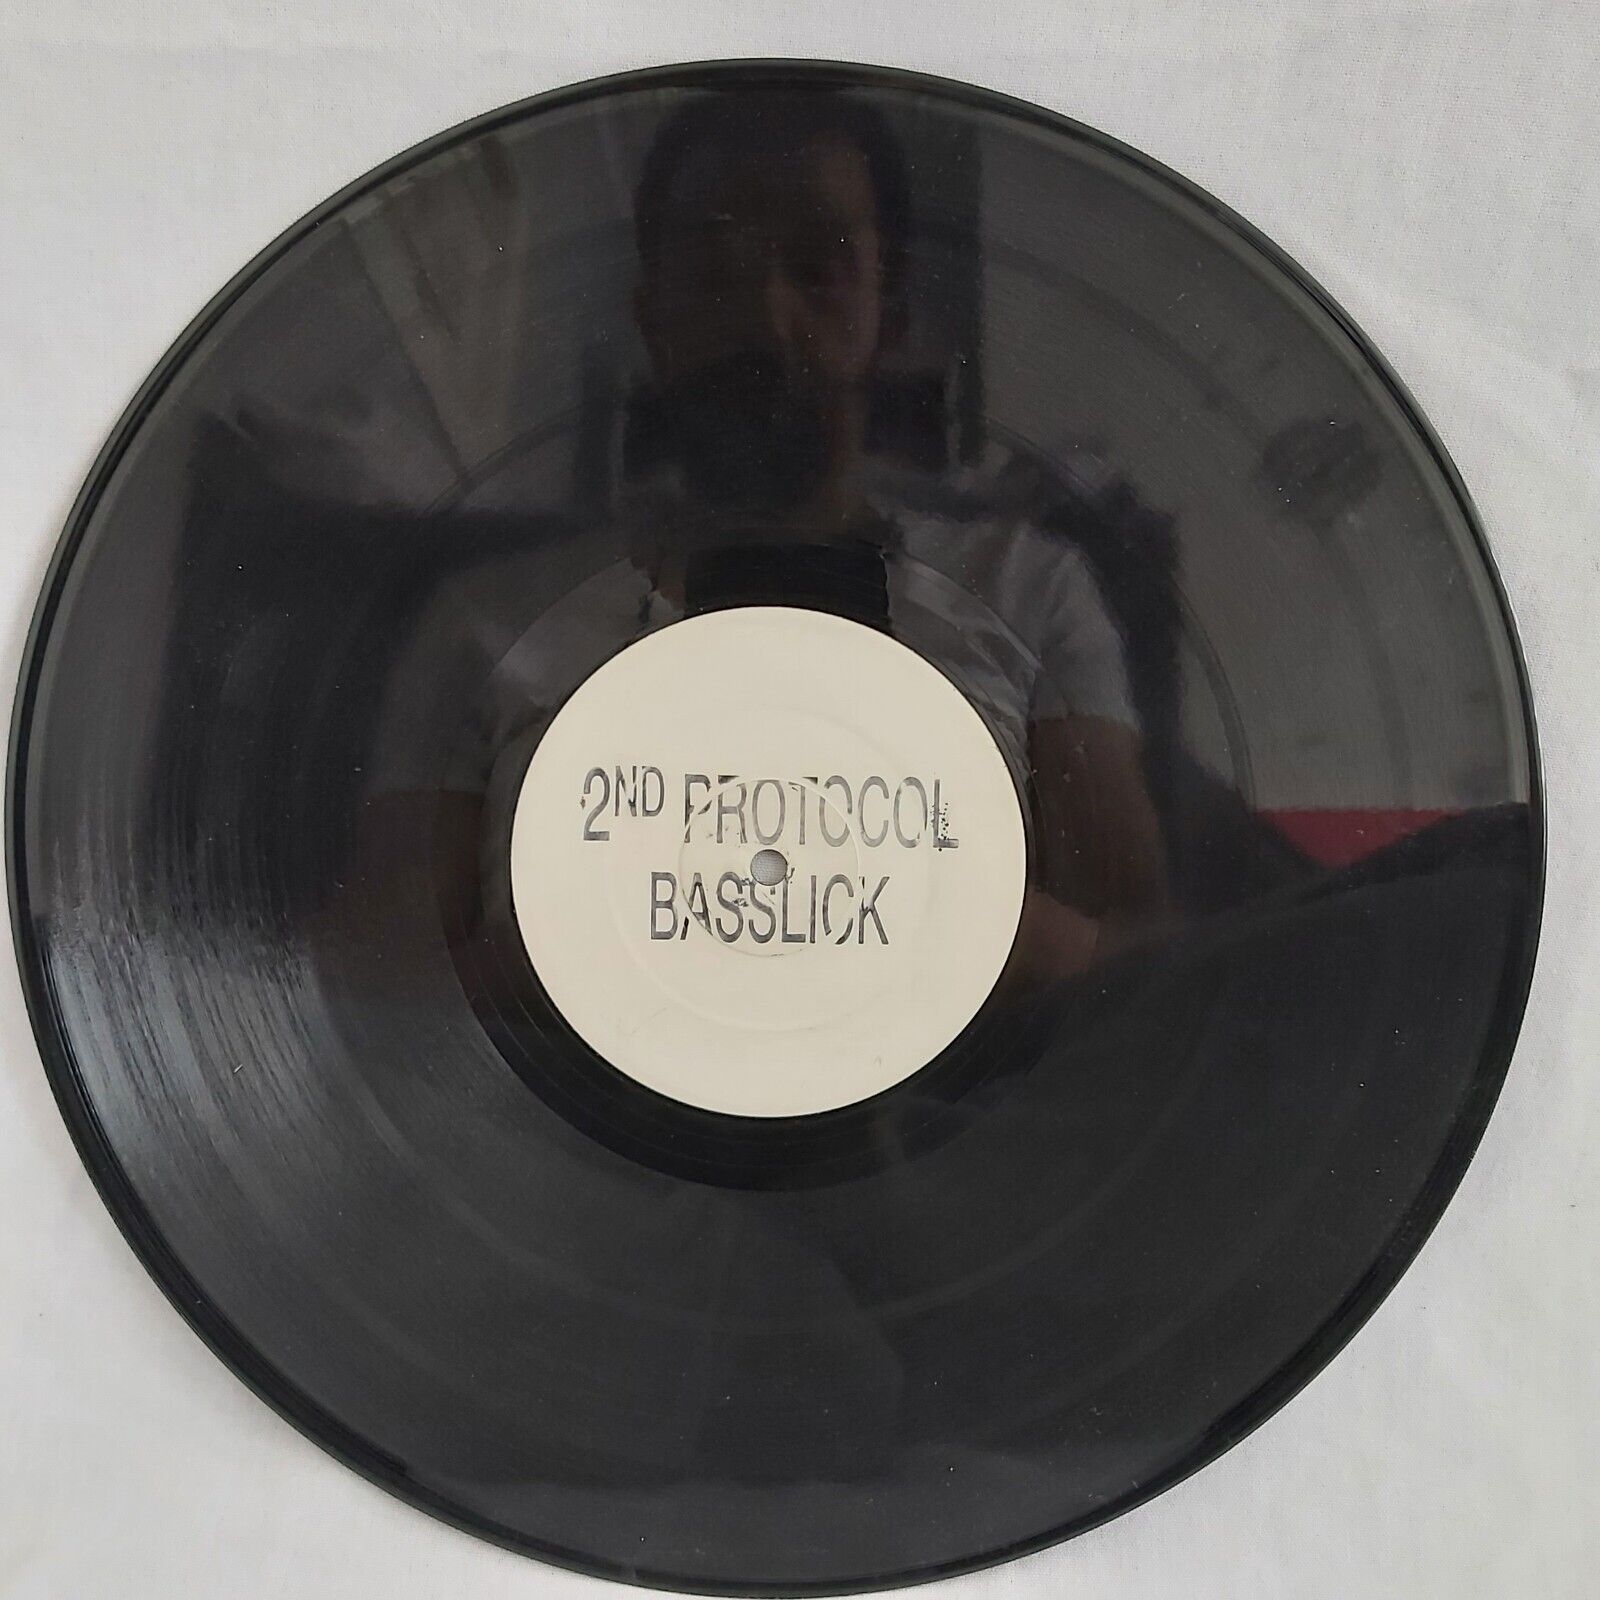 Second Protocol - Basslick UK Garage 12” vinyl white label old school garage